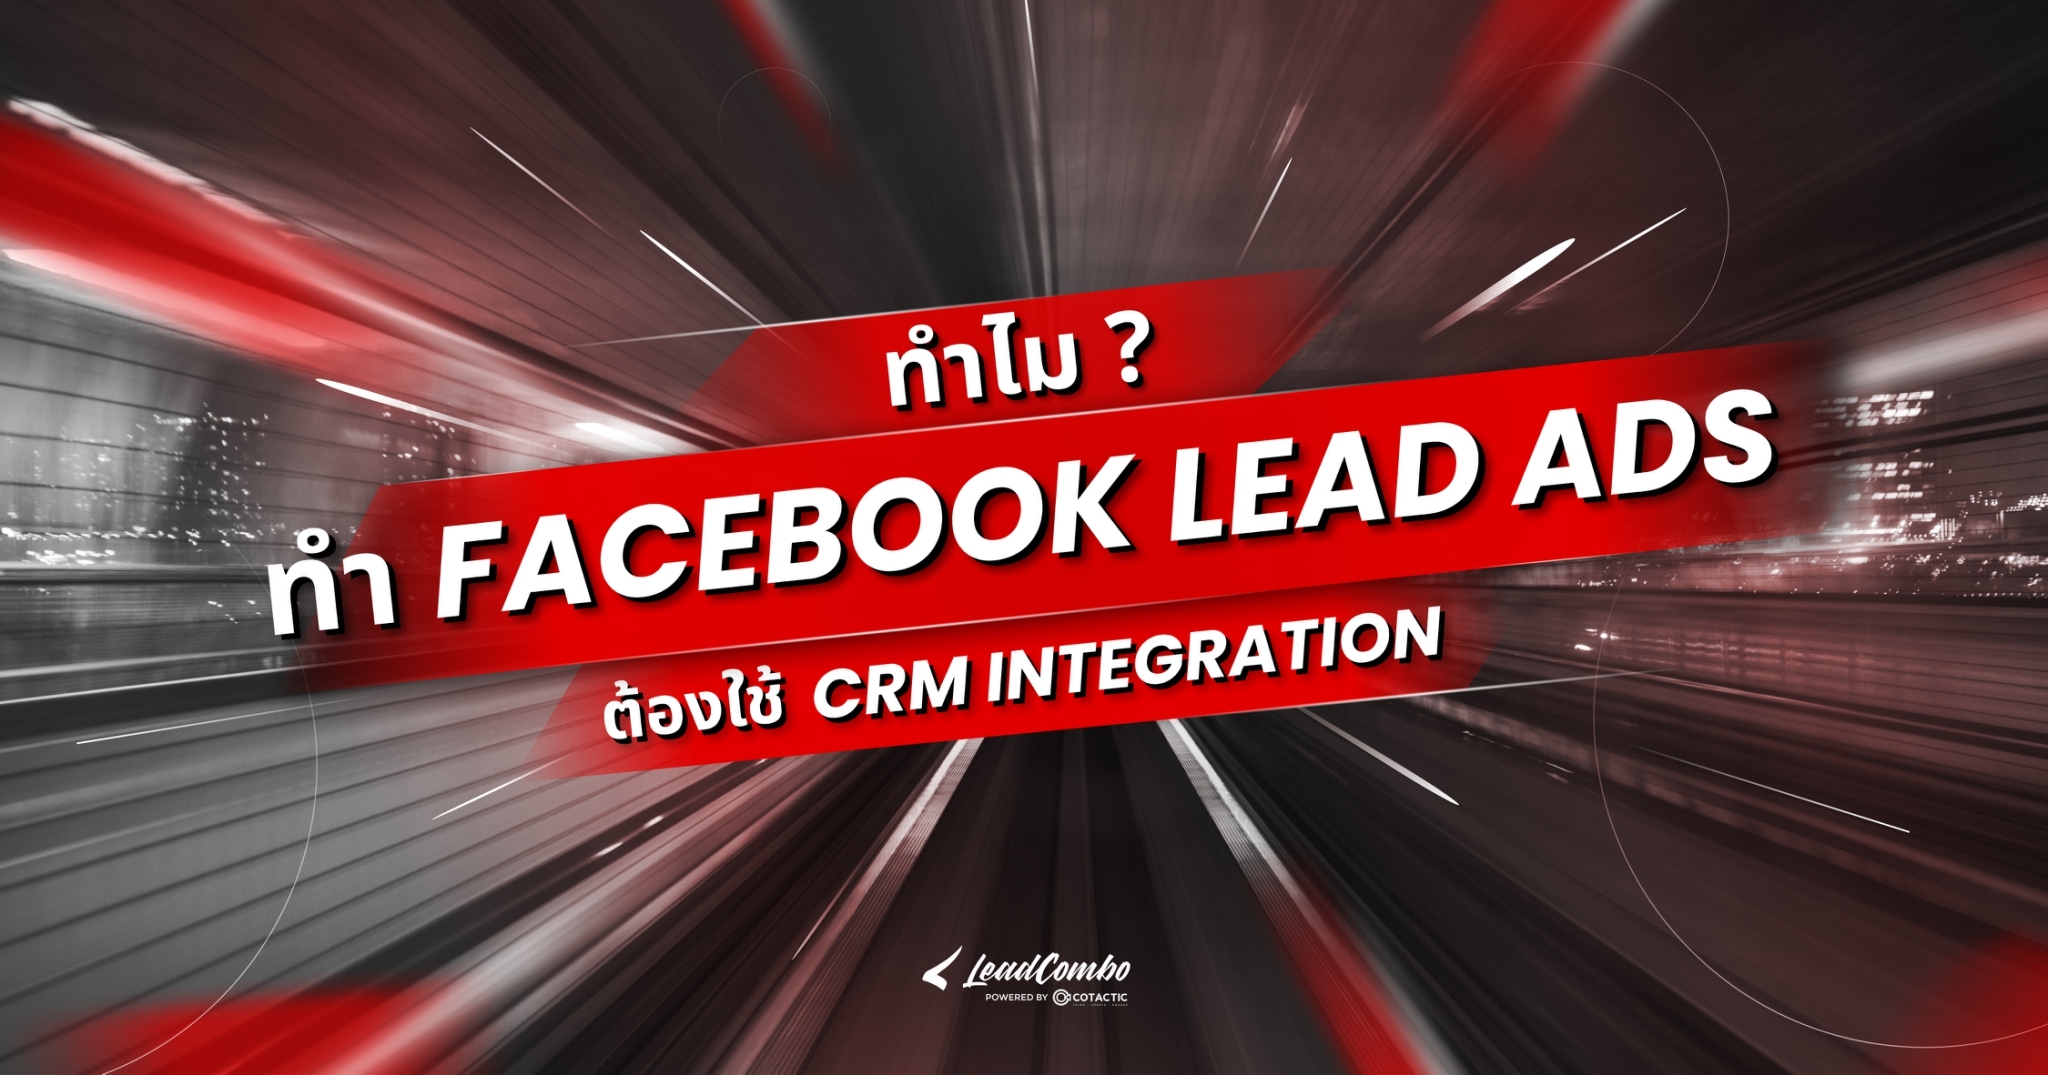 Lead Ads, Facebook Lead Ads, Facebook CRM Integration